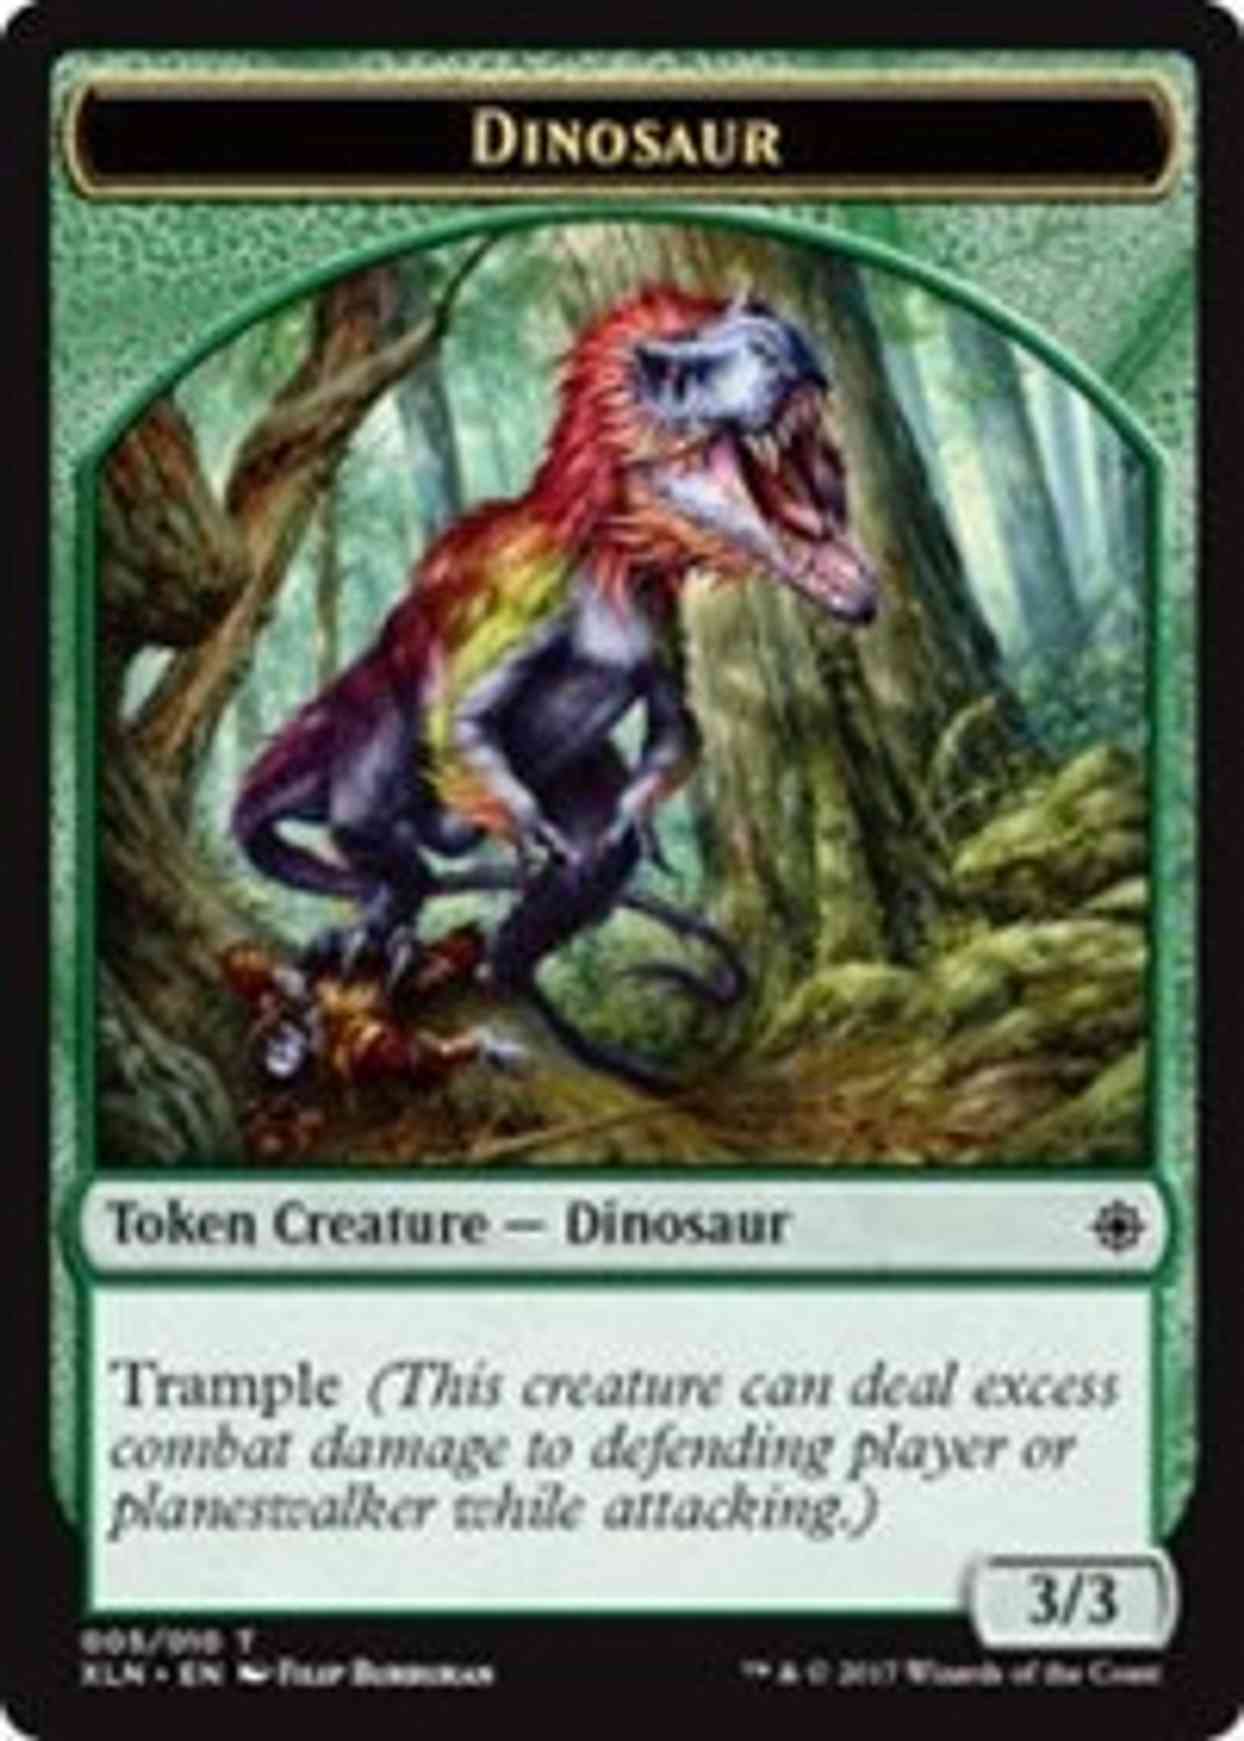 Dinosaur // Treasure (009) Double-sided Token magic card front